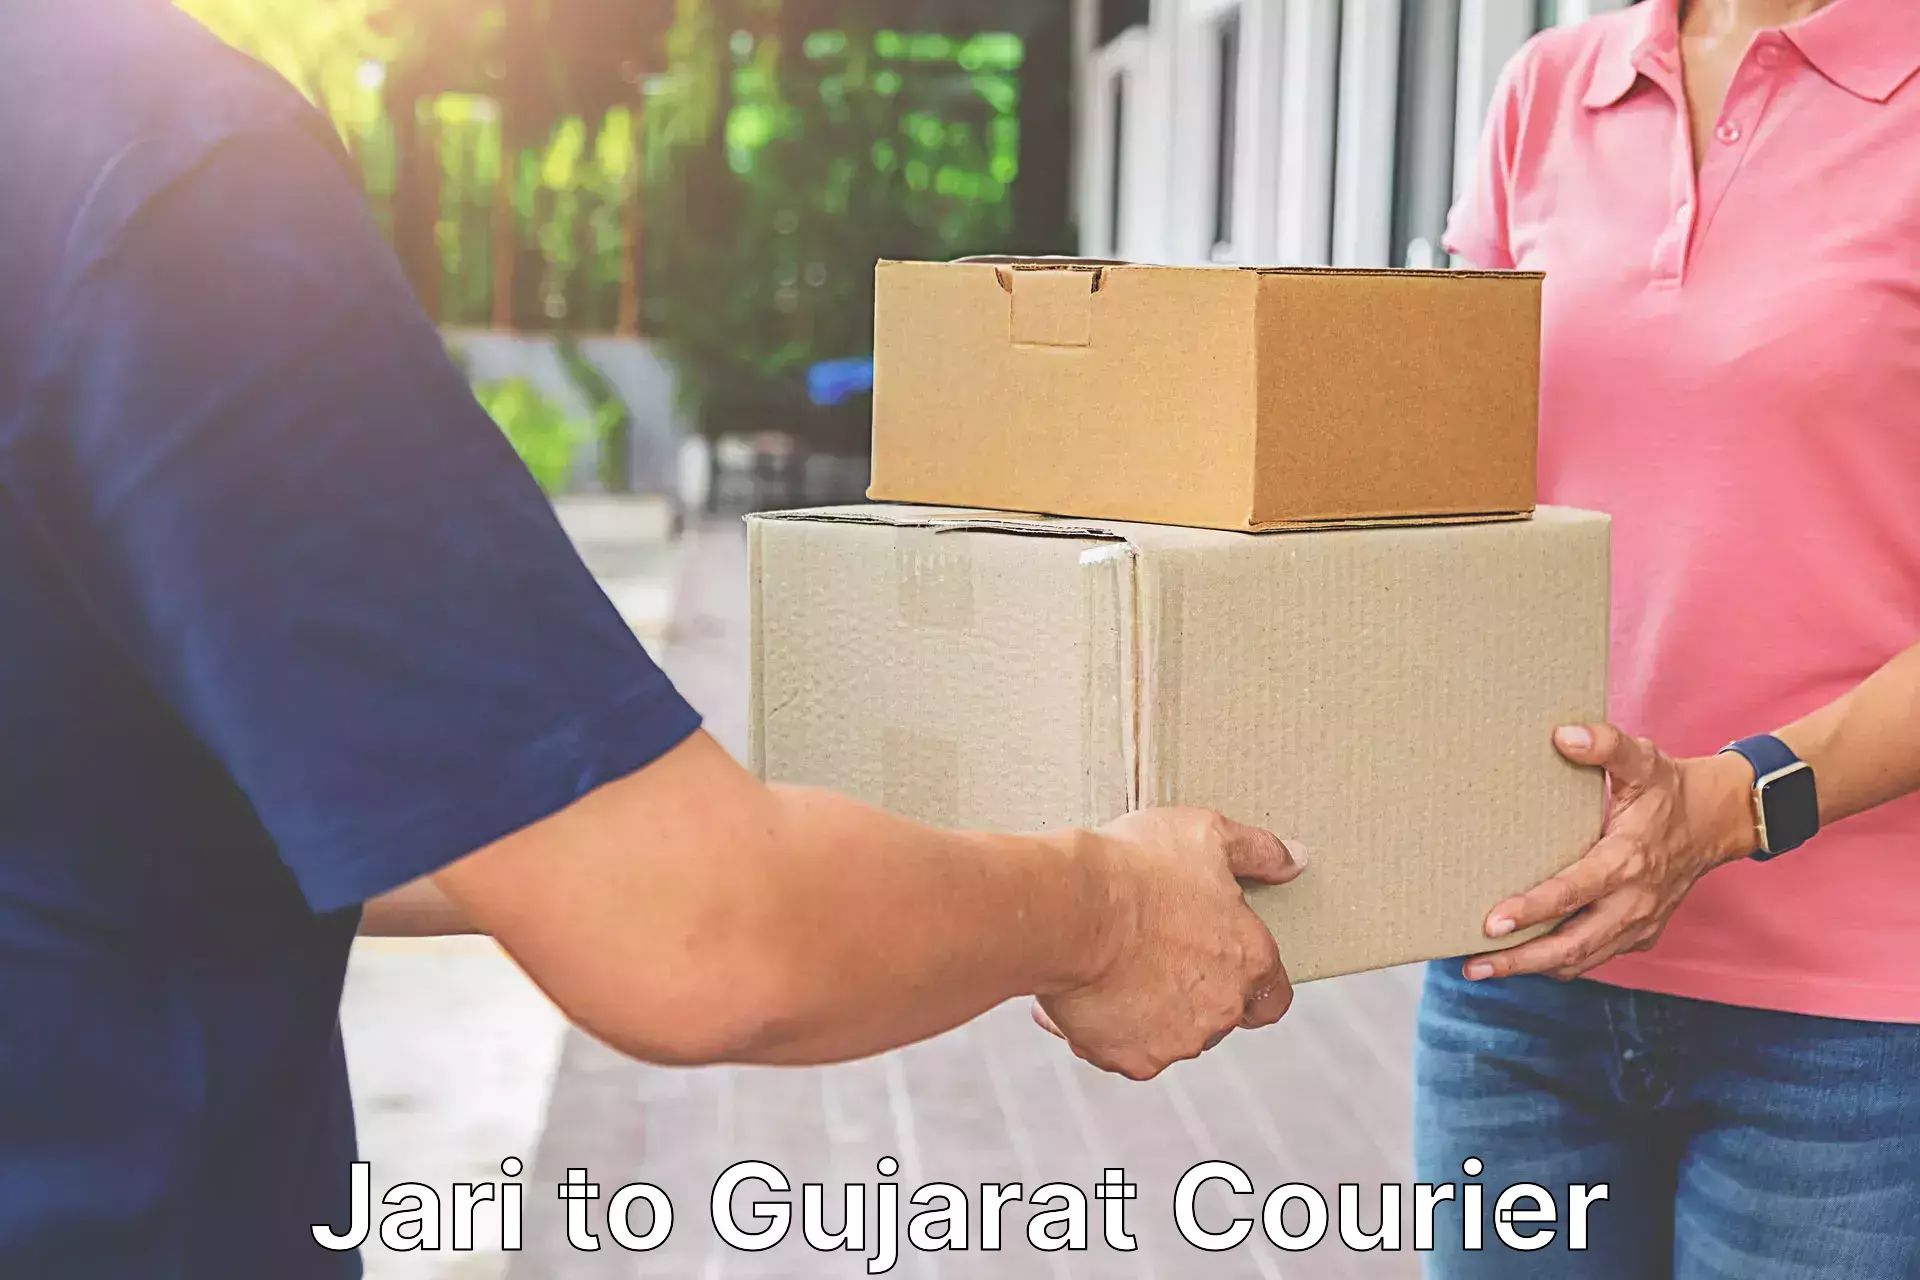 Customer-focused courier Jari to Bhatiya